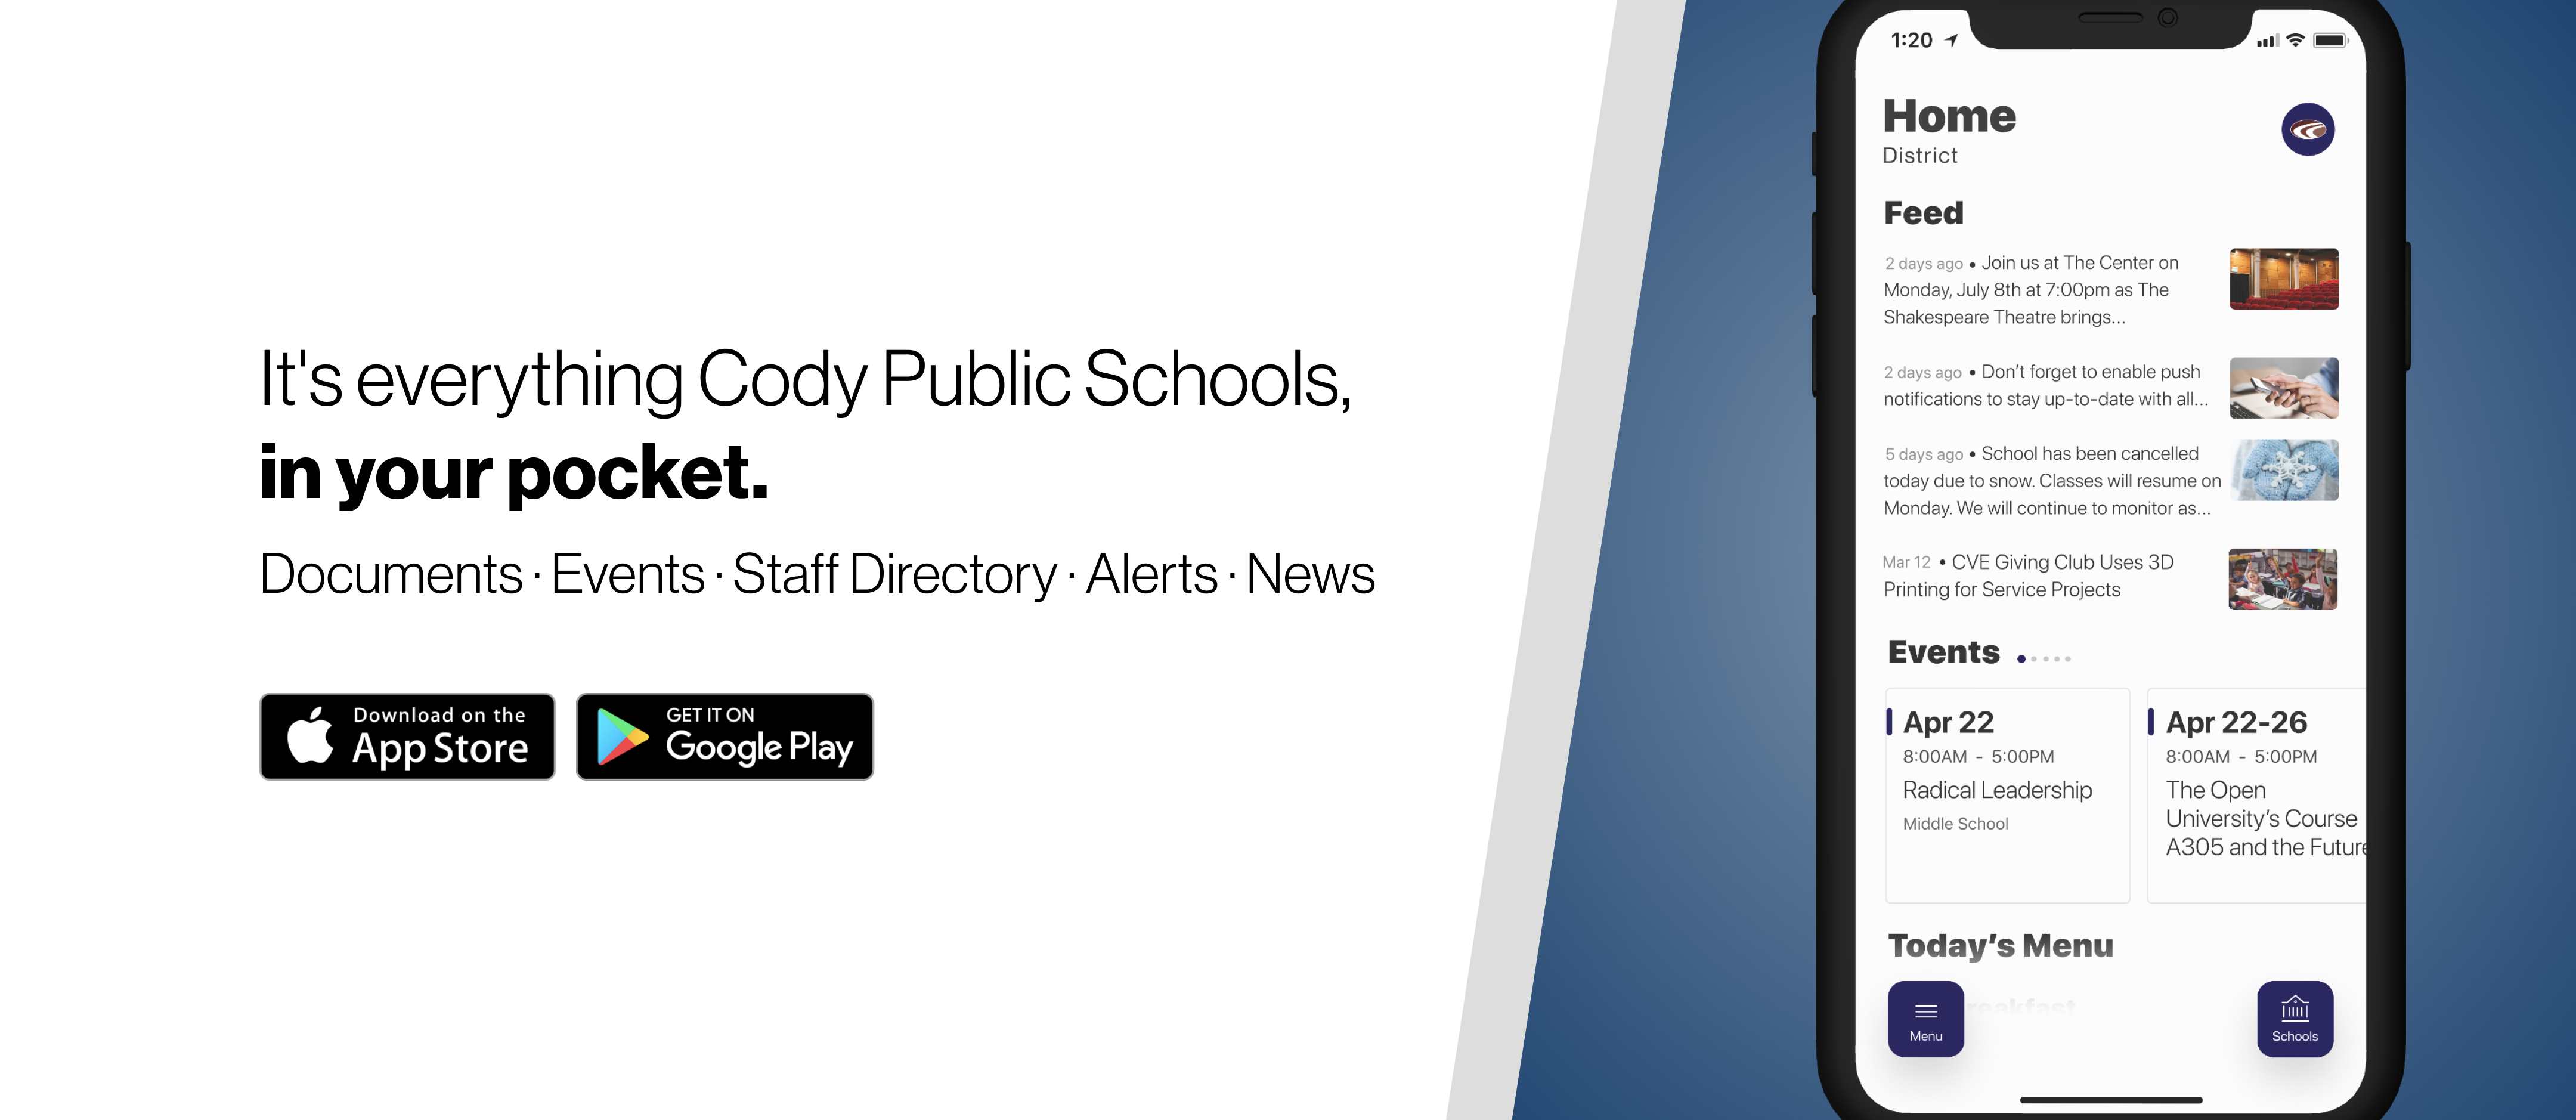 Cody Public Schools is in the app store